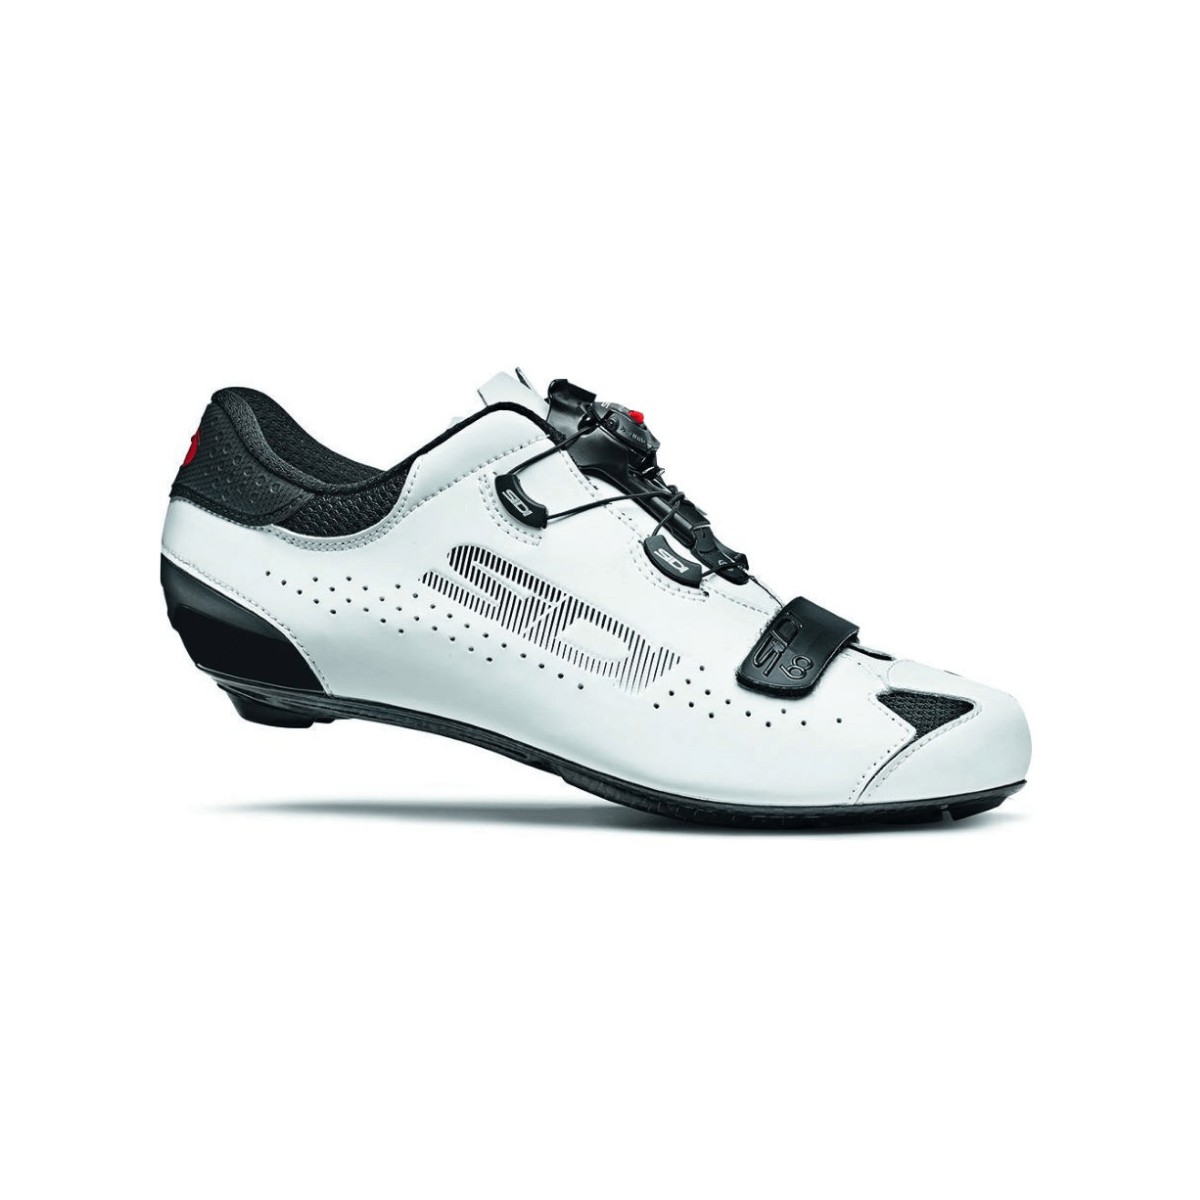 Photos - Cycling Shoes SIDI Sixty Shoes Black White, Size 40 - EUR 705451-40 